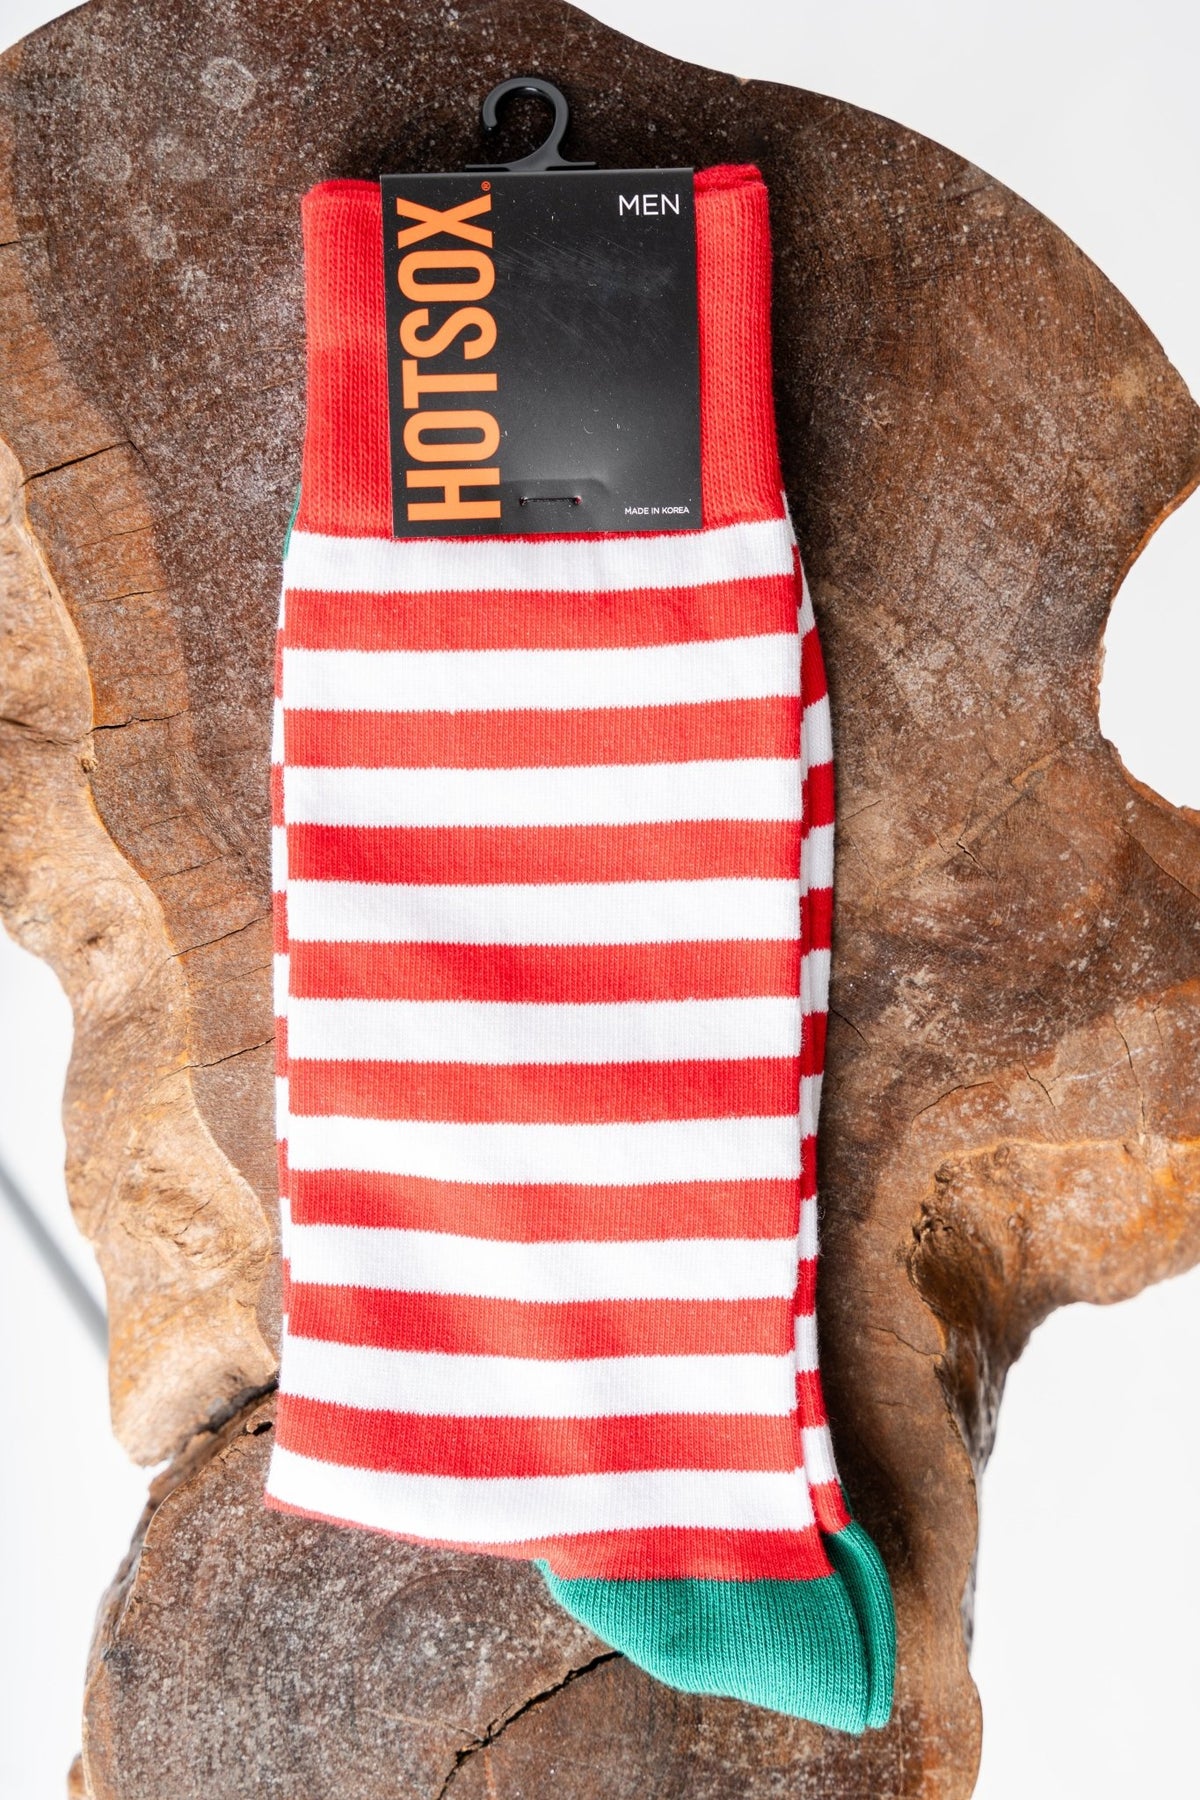 HotSox men's Christmas stripes socks red/green - Trendy Socks at Lush Fashion Lounge Boutique in Oklahoma City